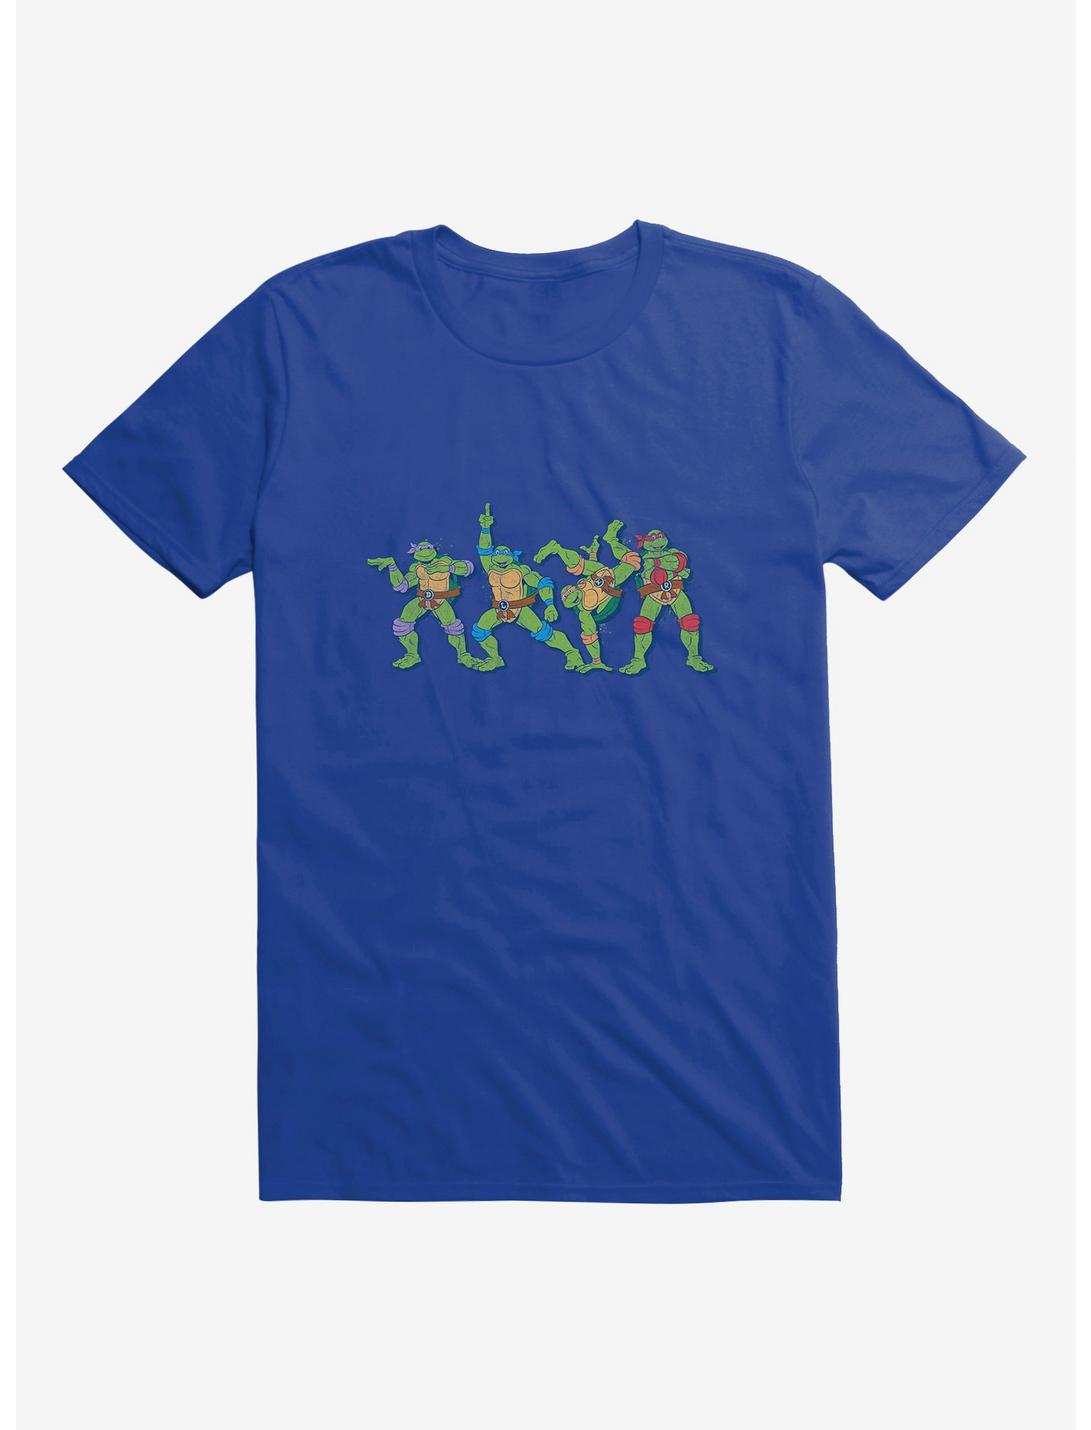 Teenage Mutant Ninja Turtles Group Dance Poses Blue T-Shirt, , hi-res